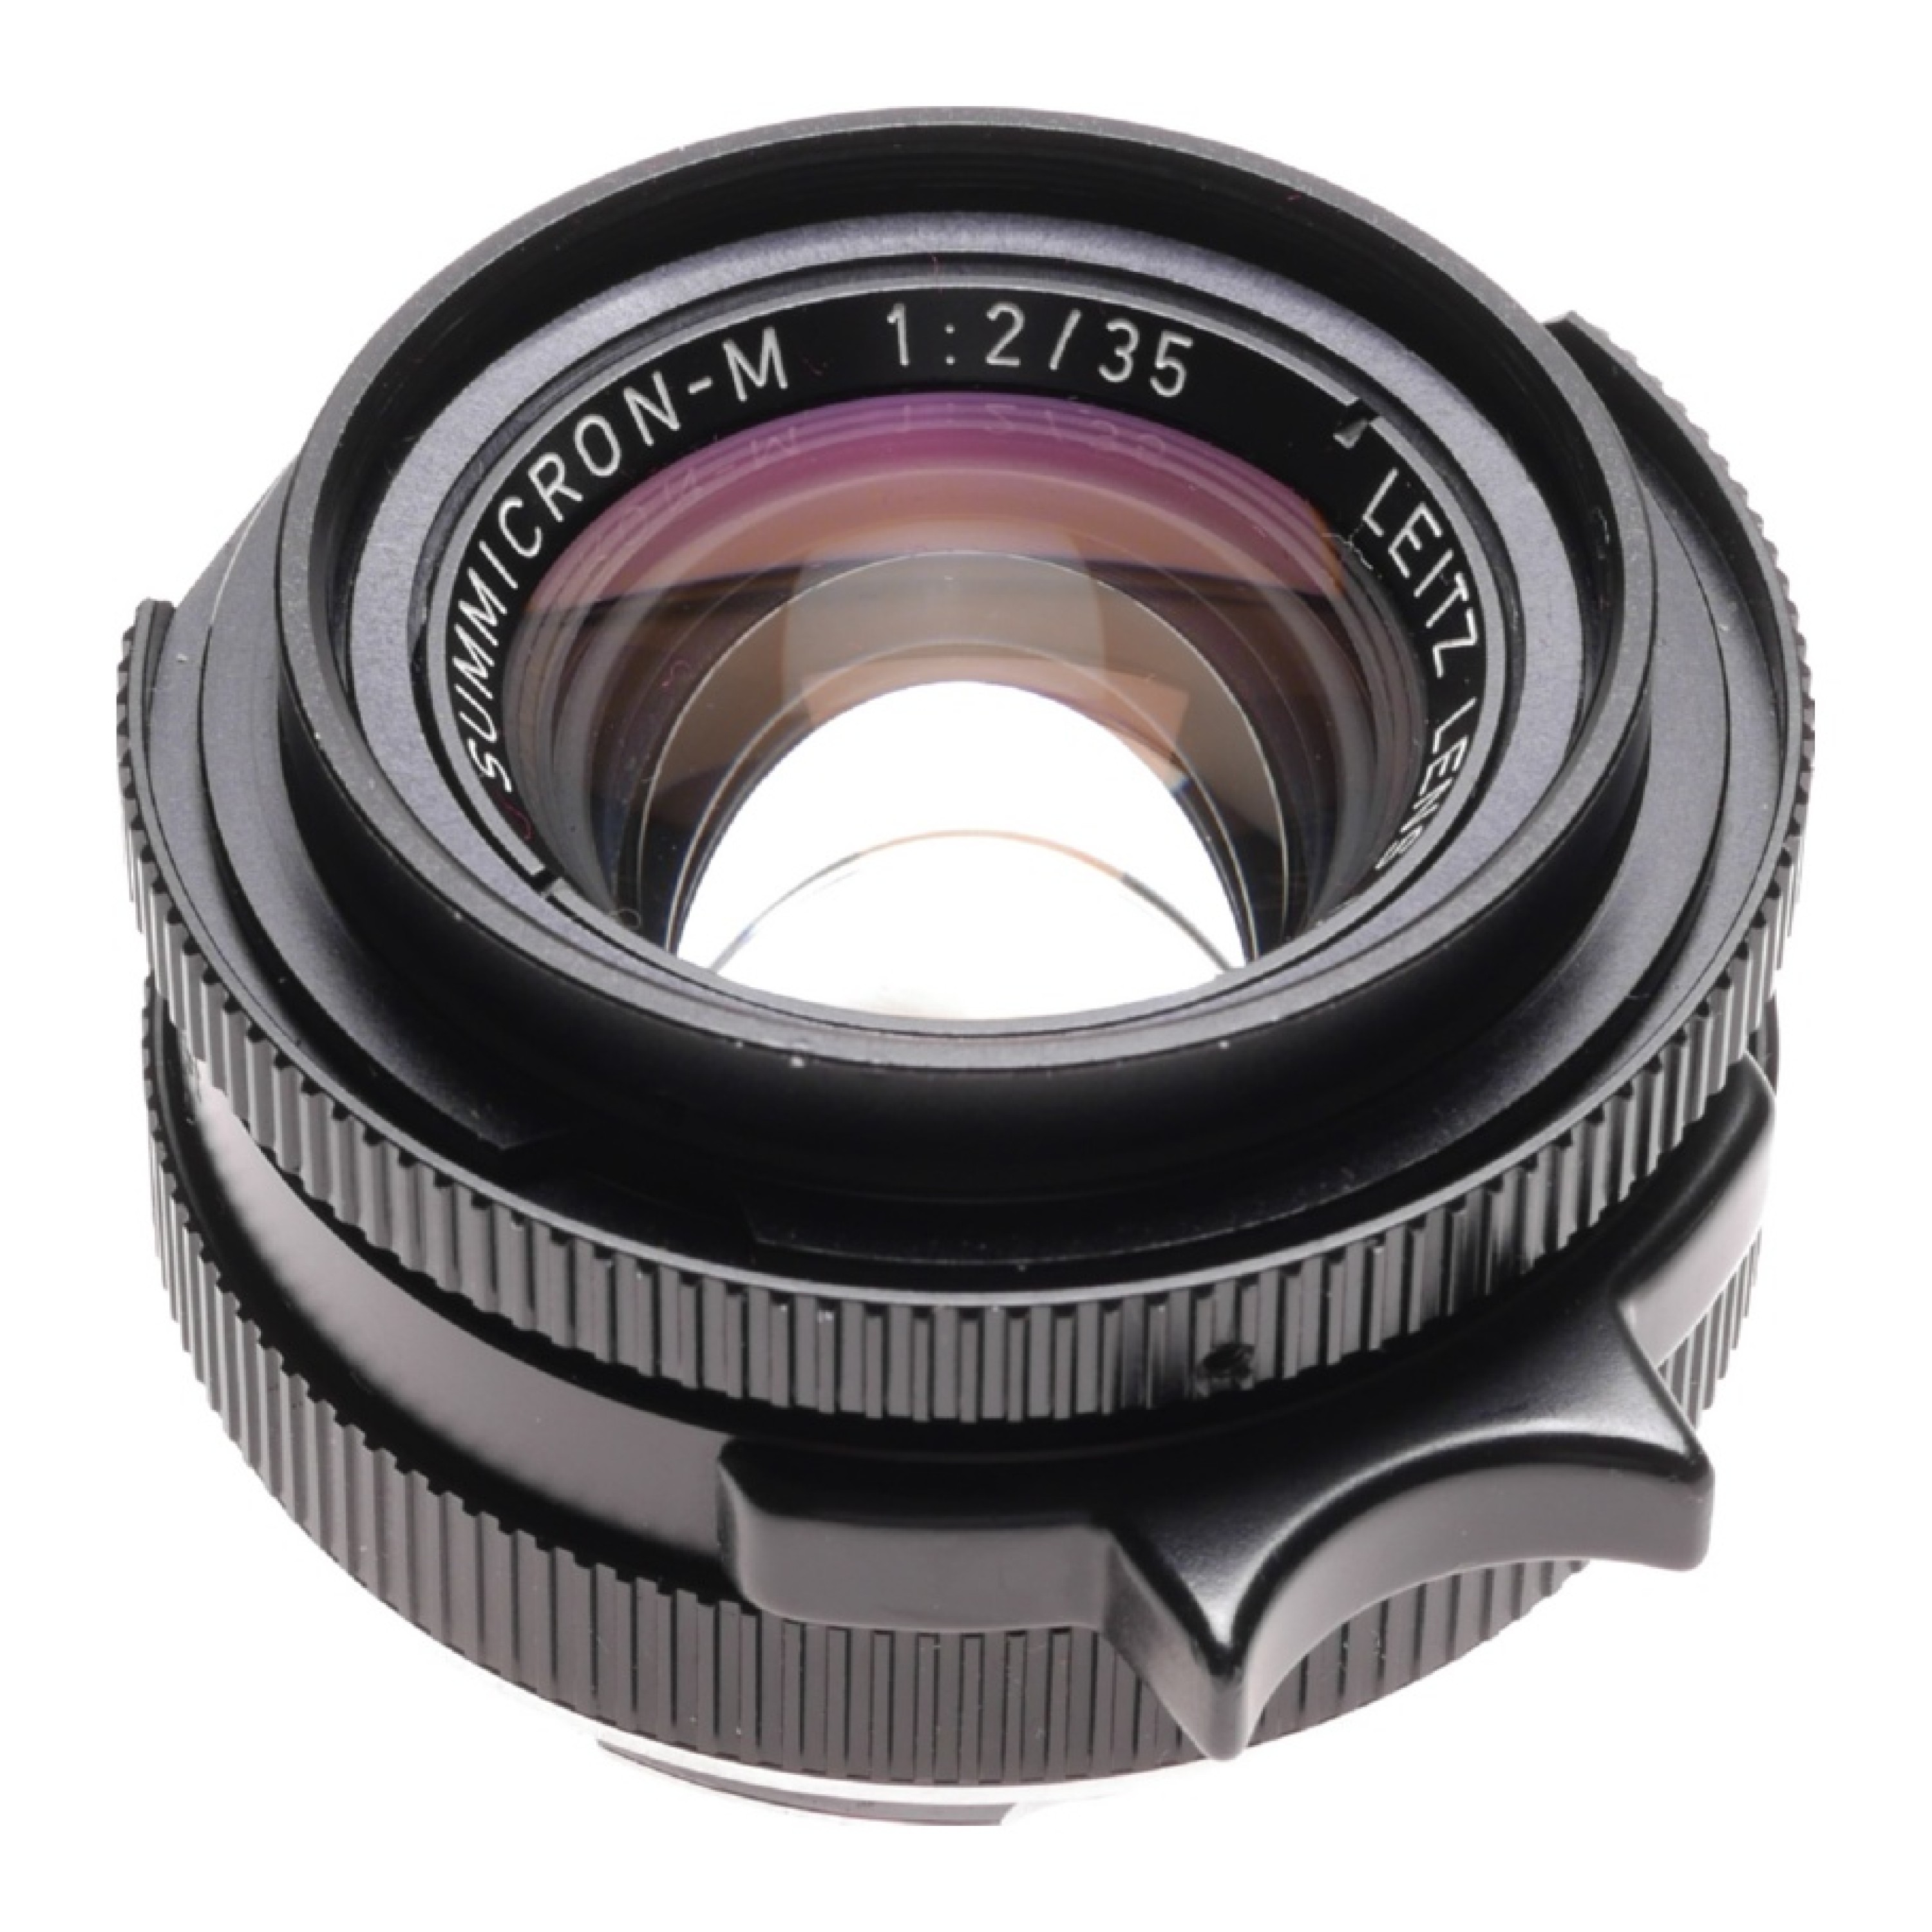 35mm textured bokeh lens